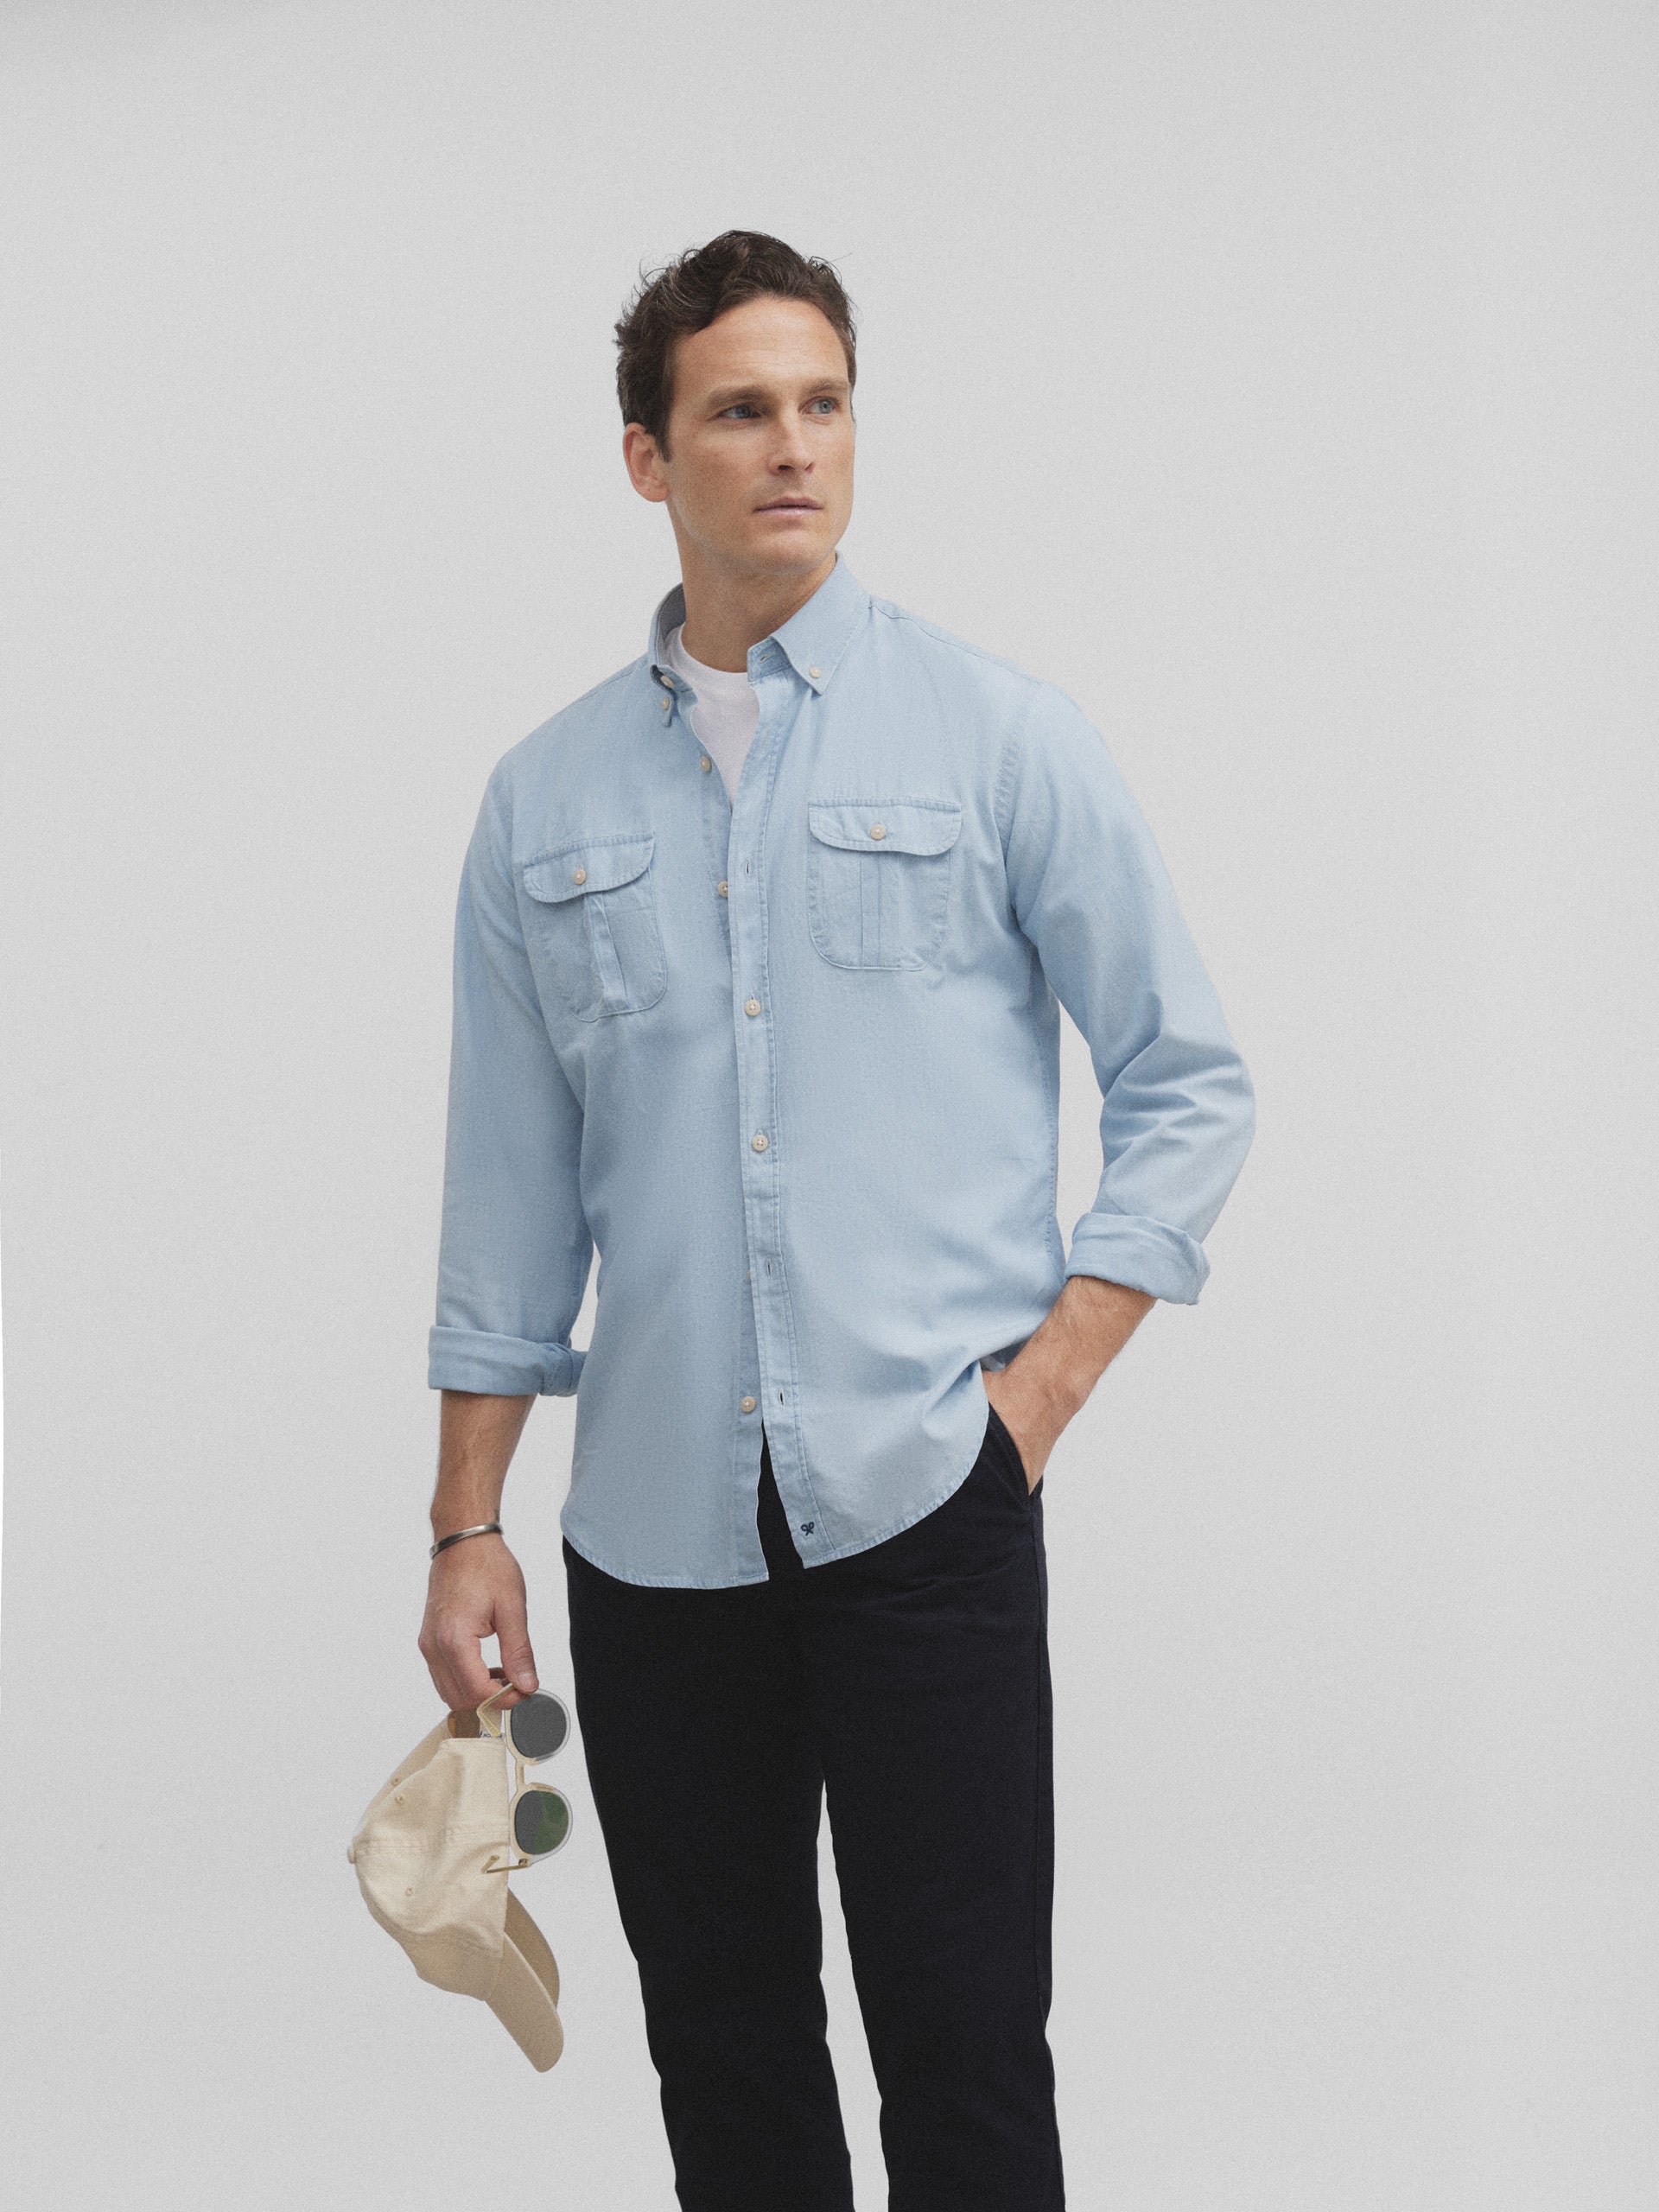 Denim sport shirt with light blue pockets